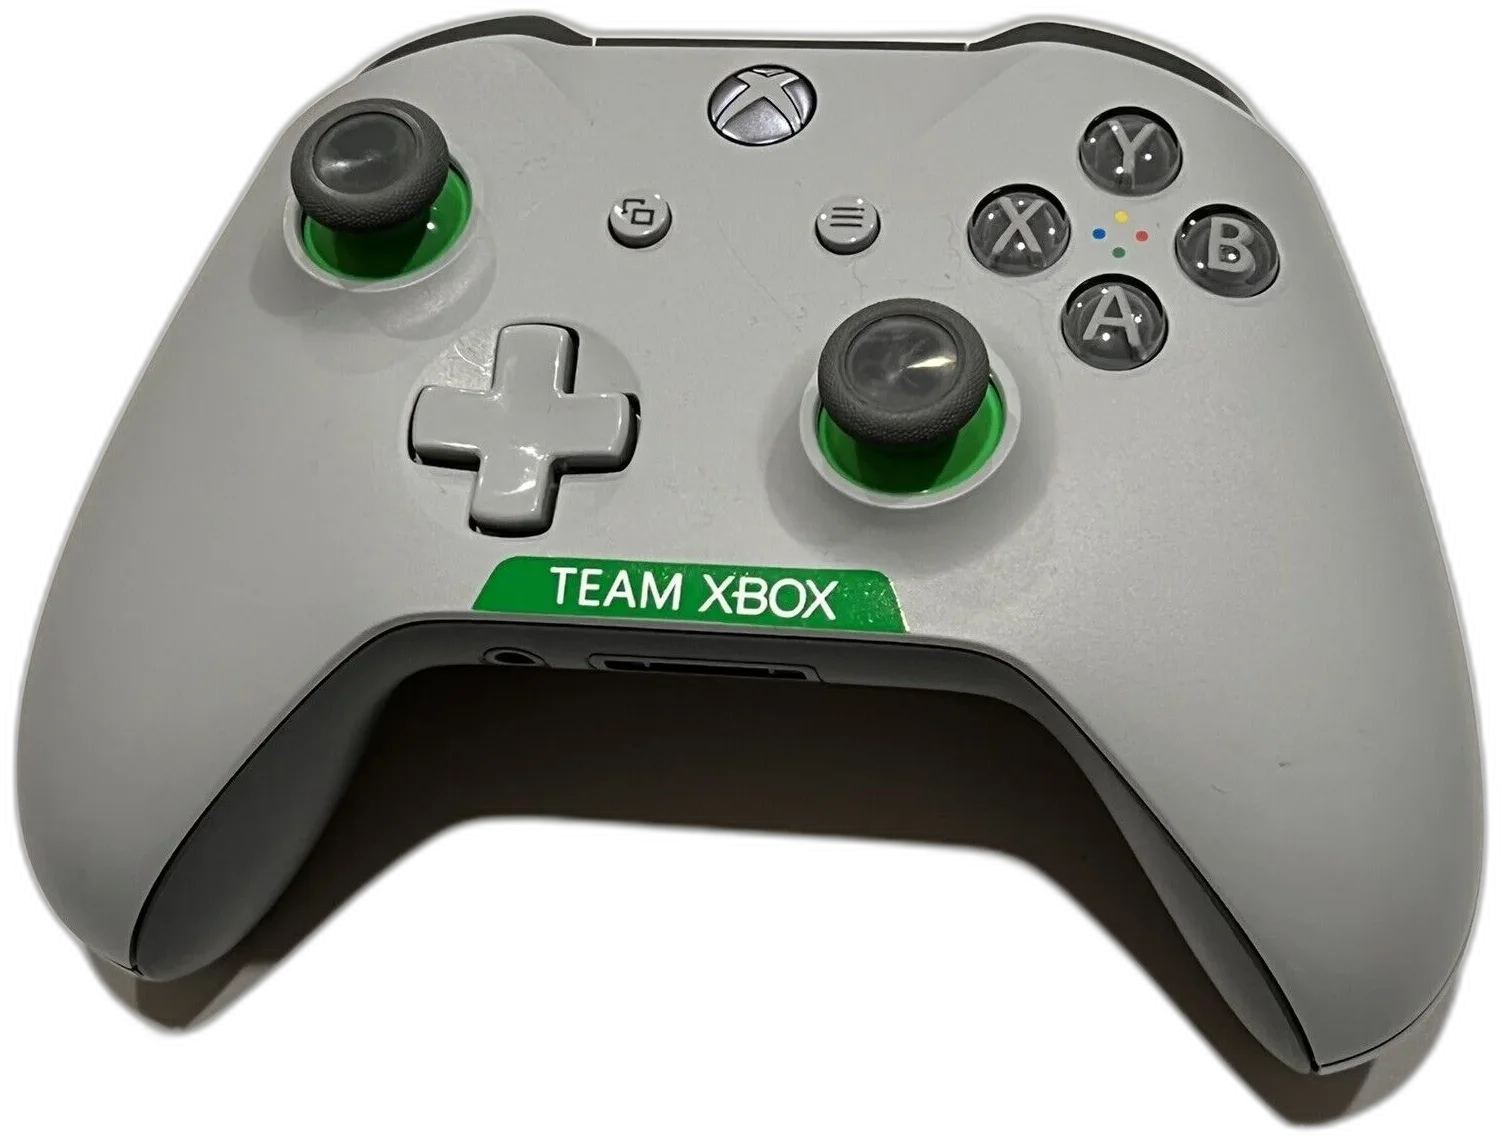  Microsoft Xbox One Team Xbox Controller